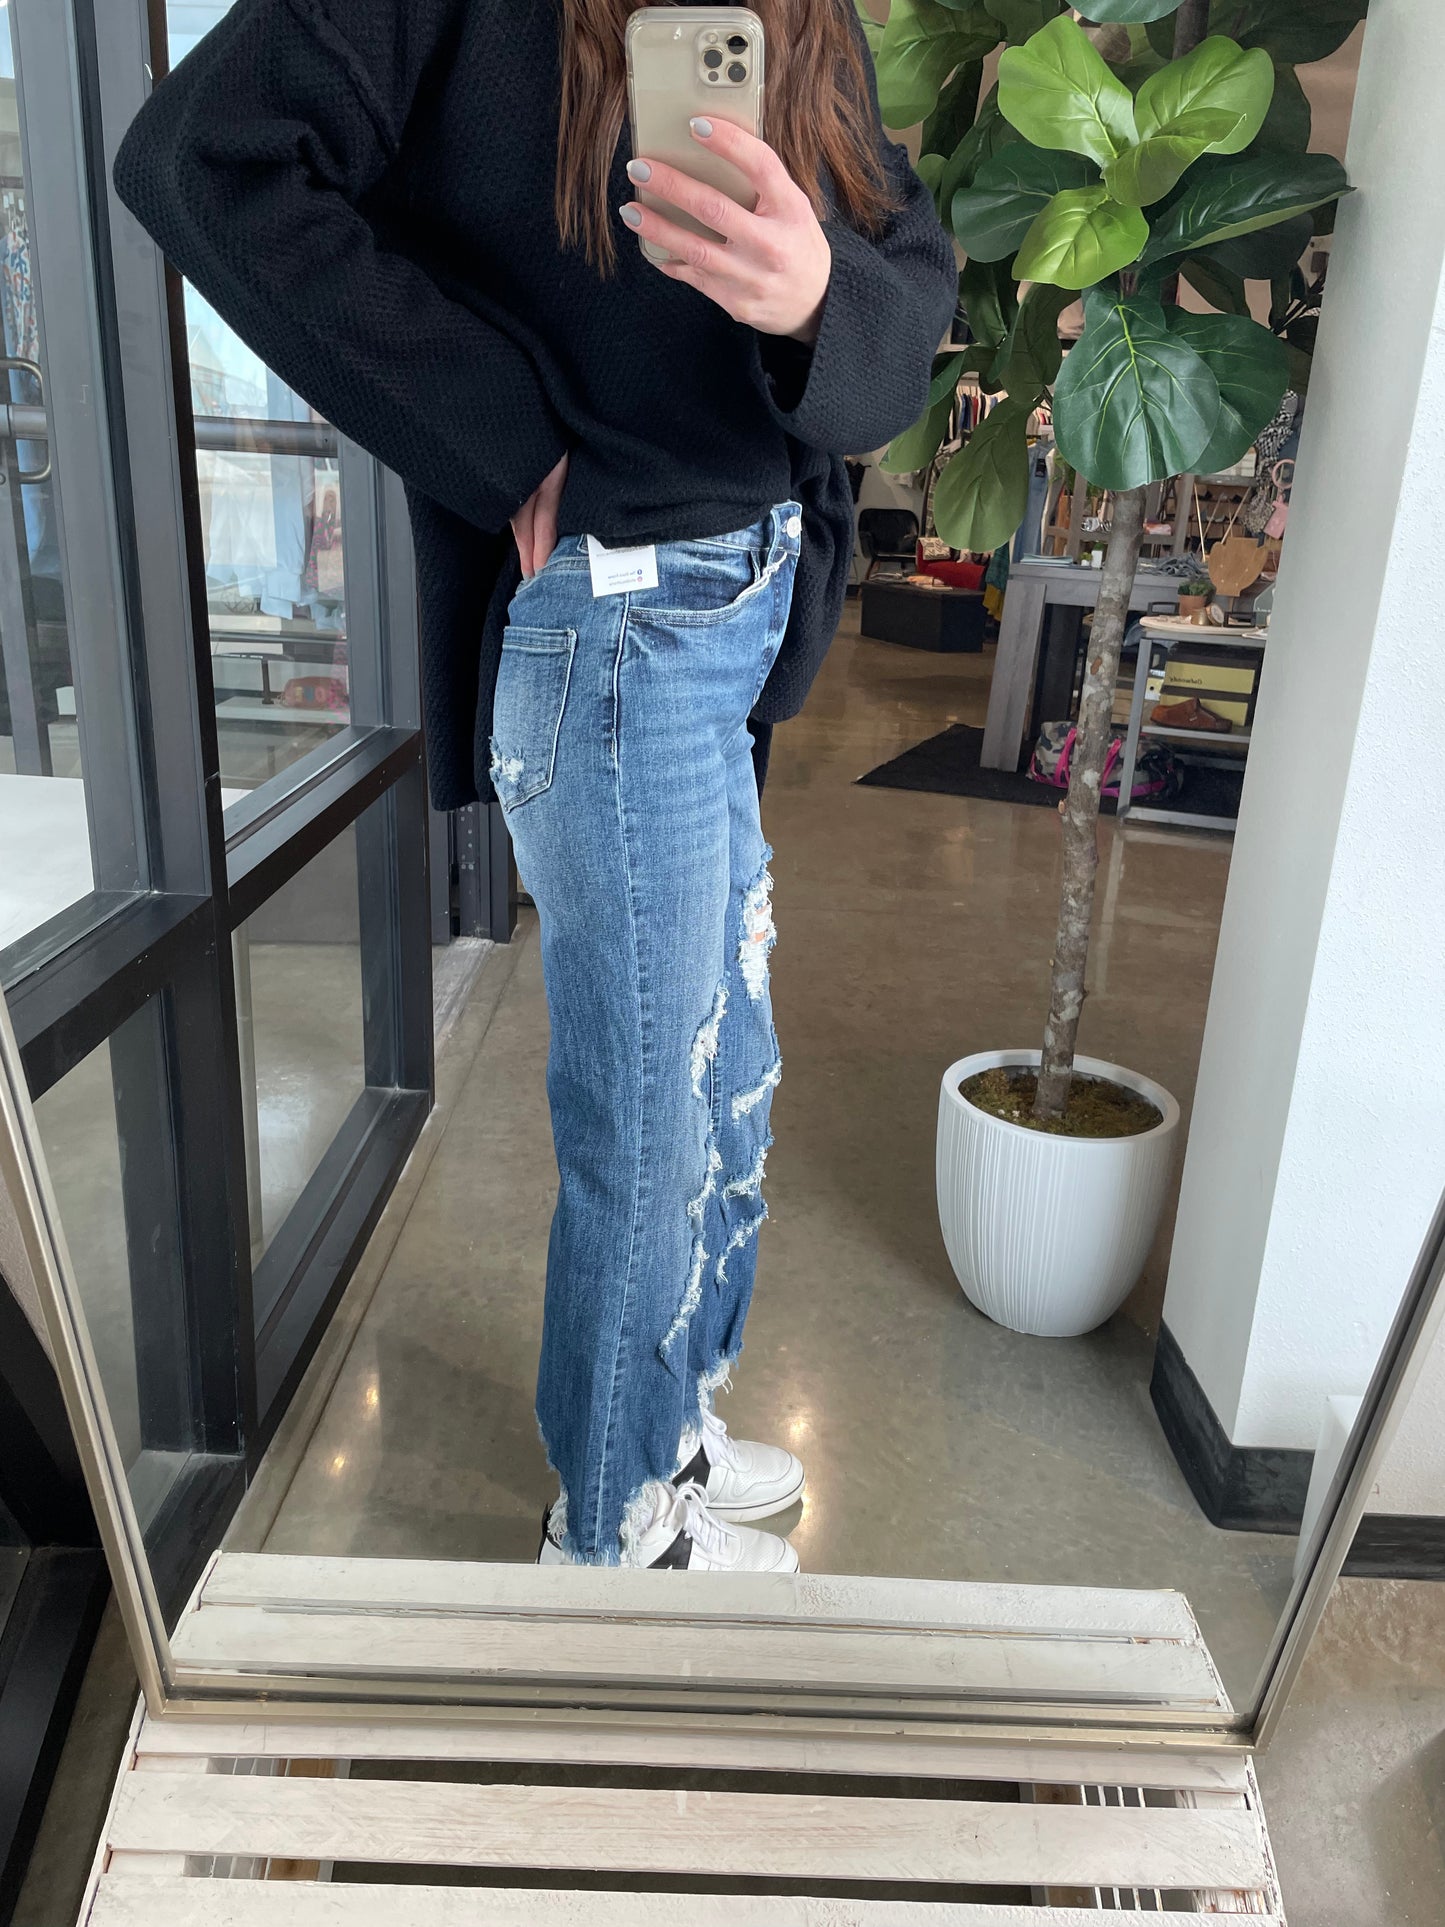 Urban Jeans